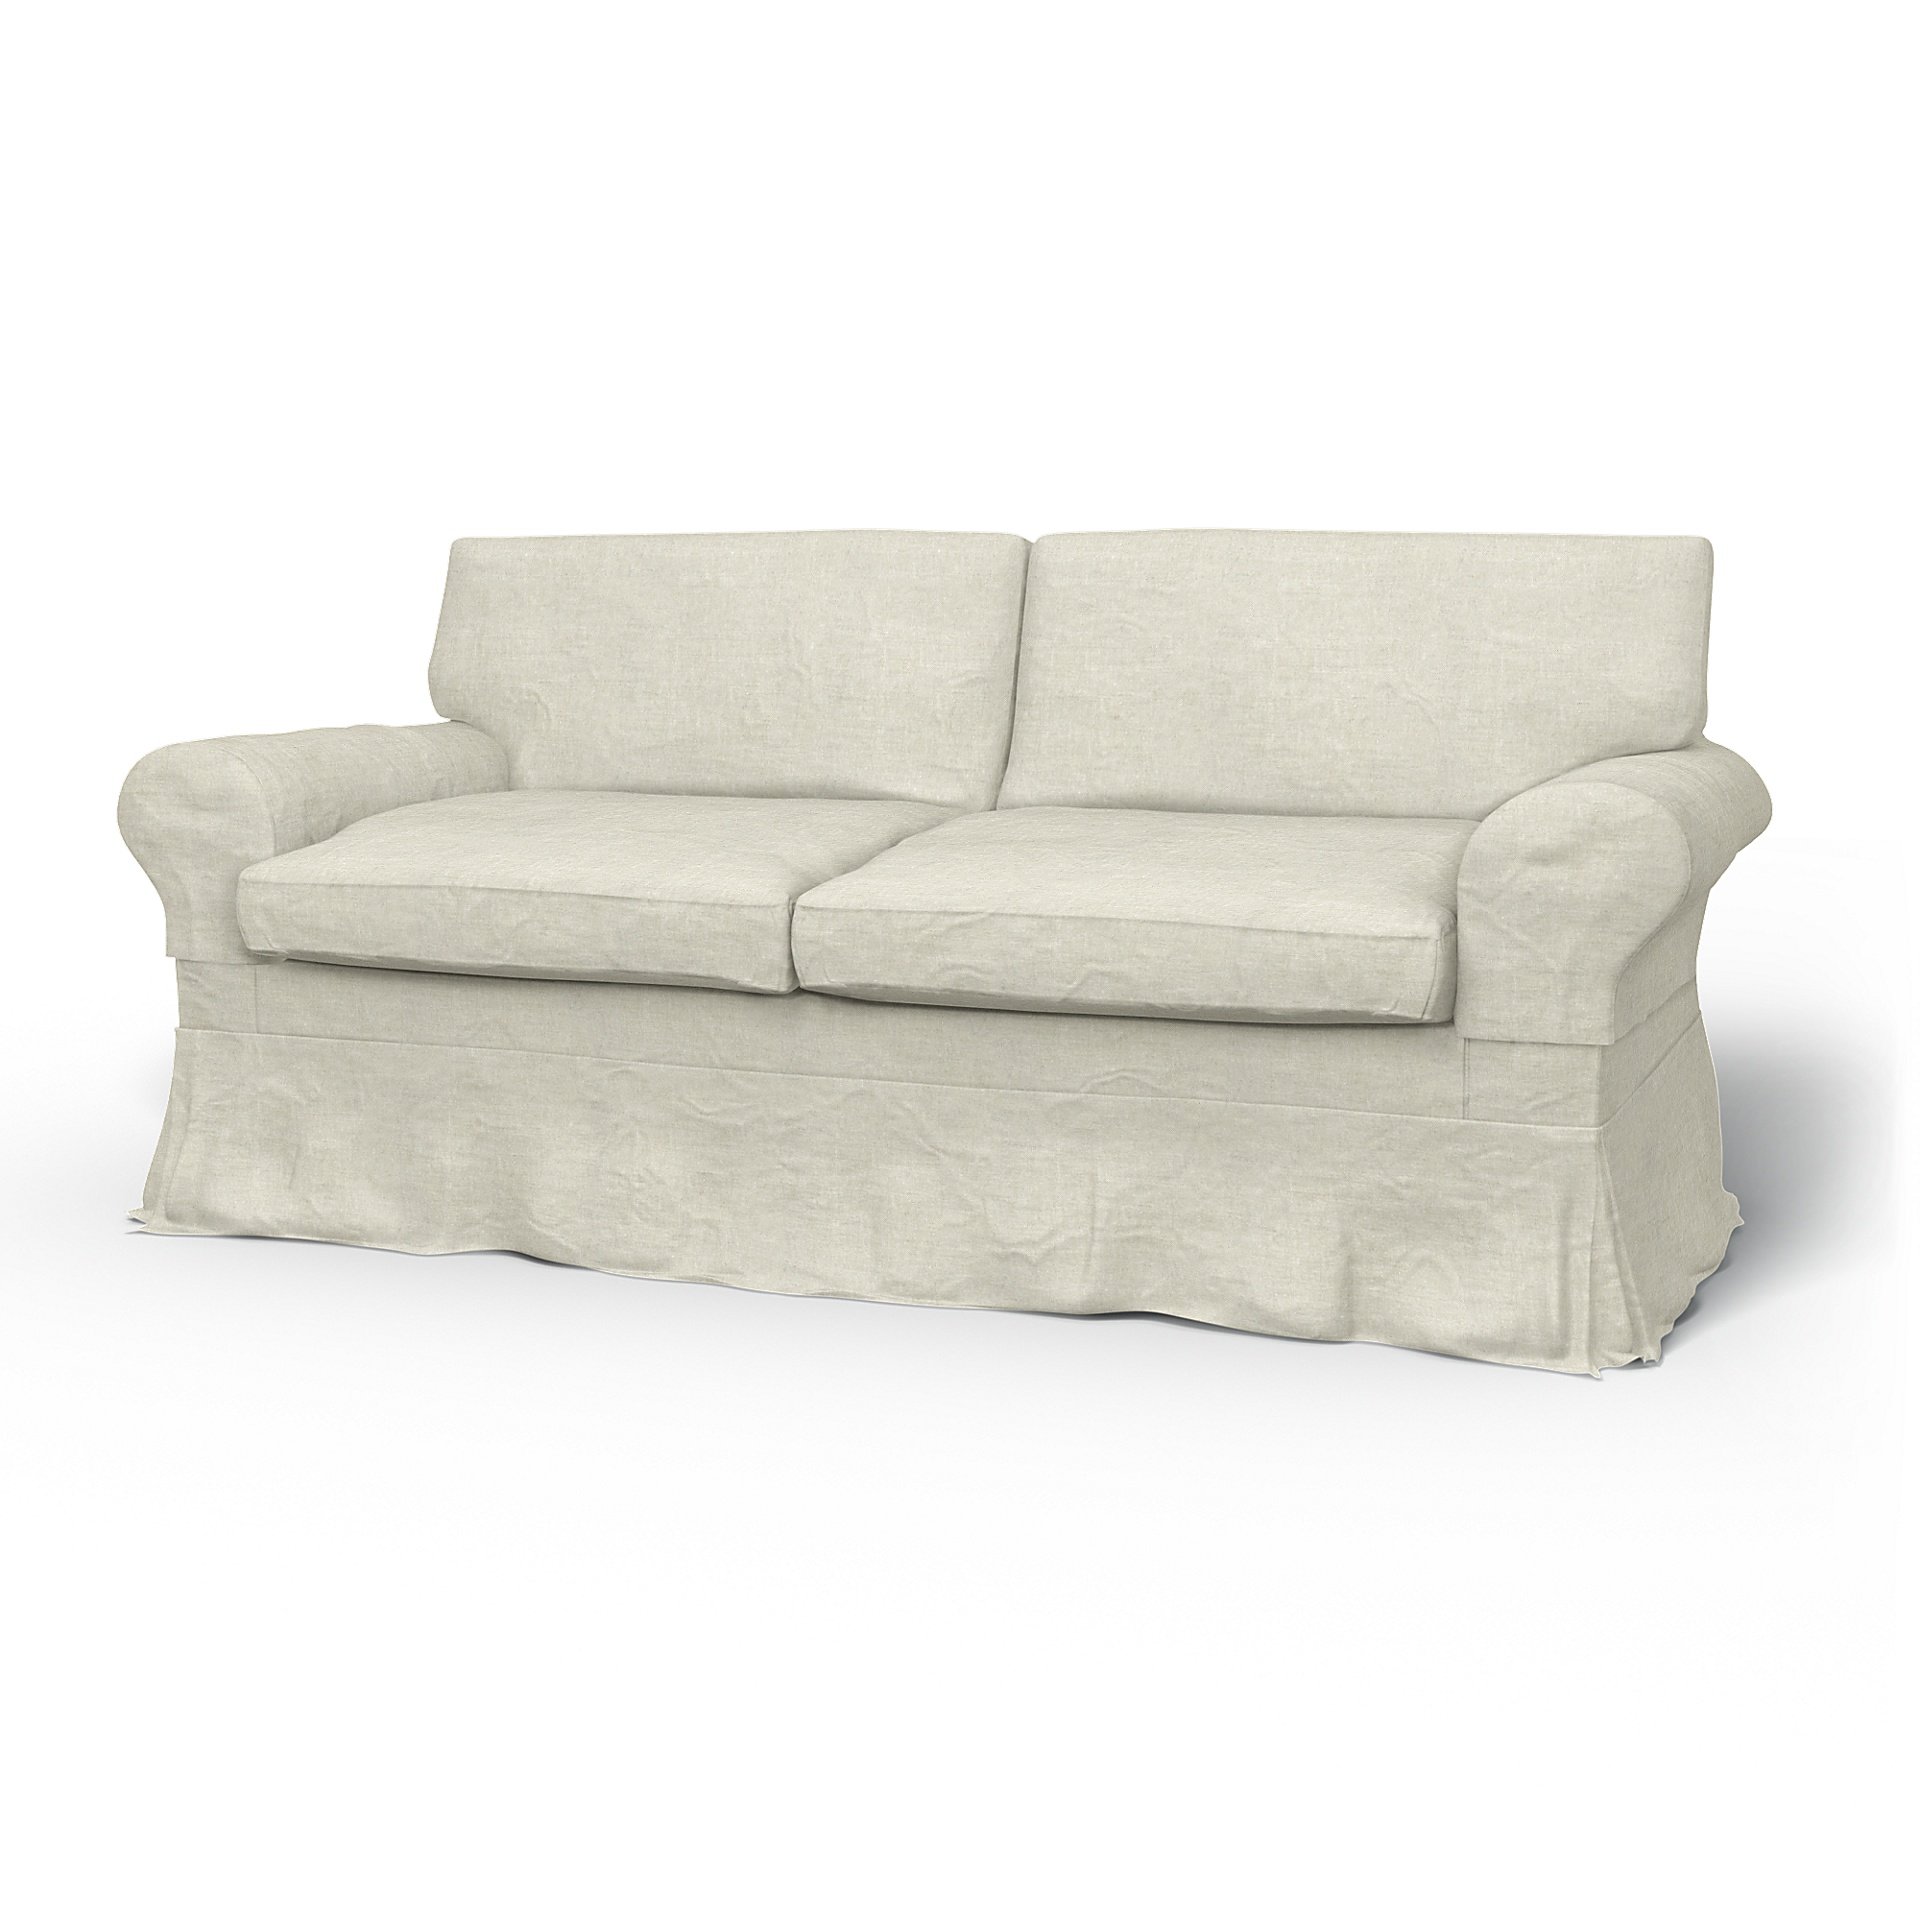 IKEA - Ektorp 2 Seater Sofa Bed Cover, Natural, Linen - Bemz